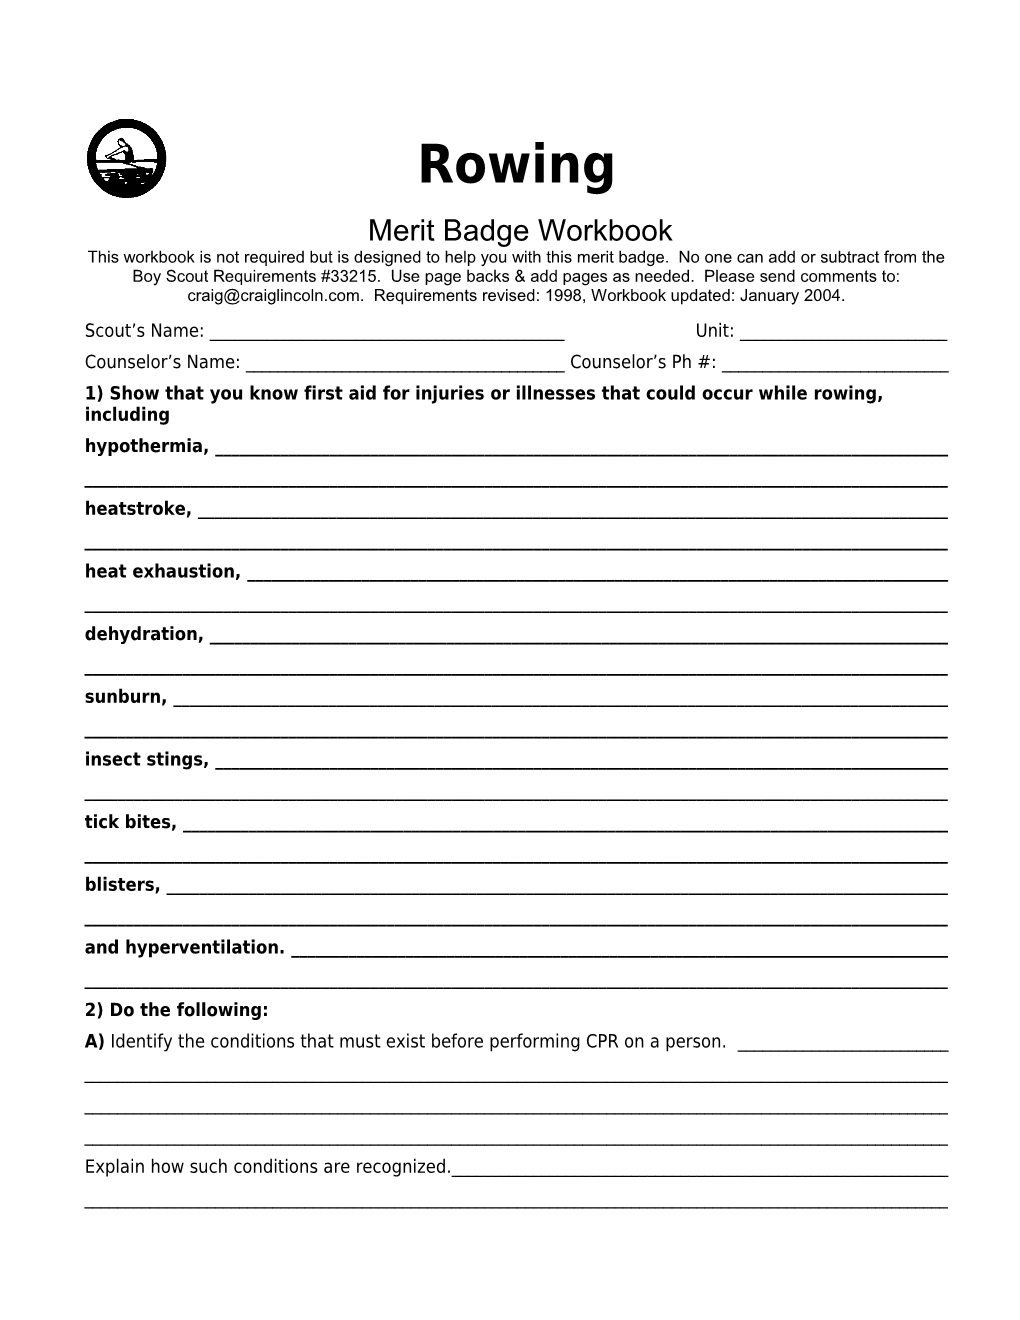 Rowing P. 3 Merit Badge Workbook Scout's Name: ______